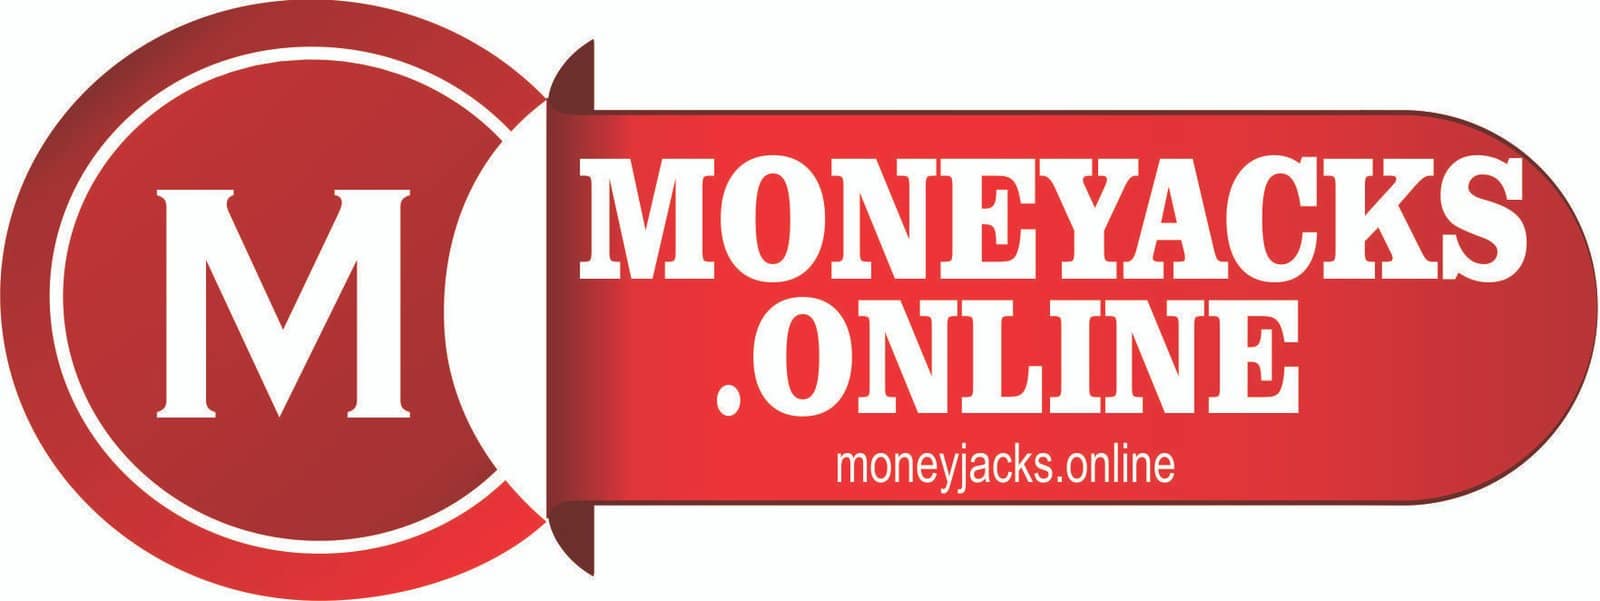 Moneyjacks.online